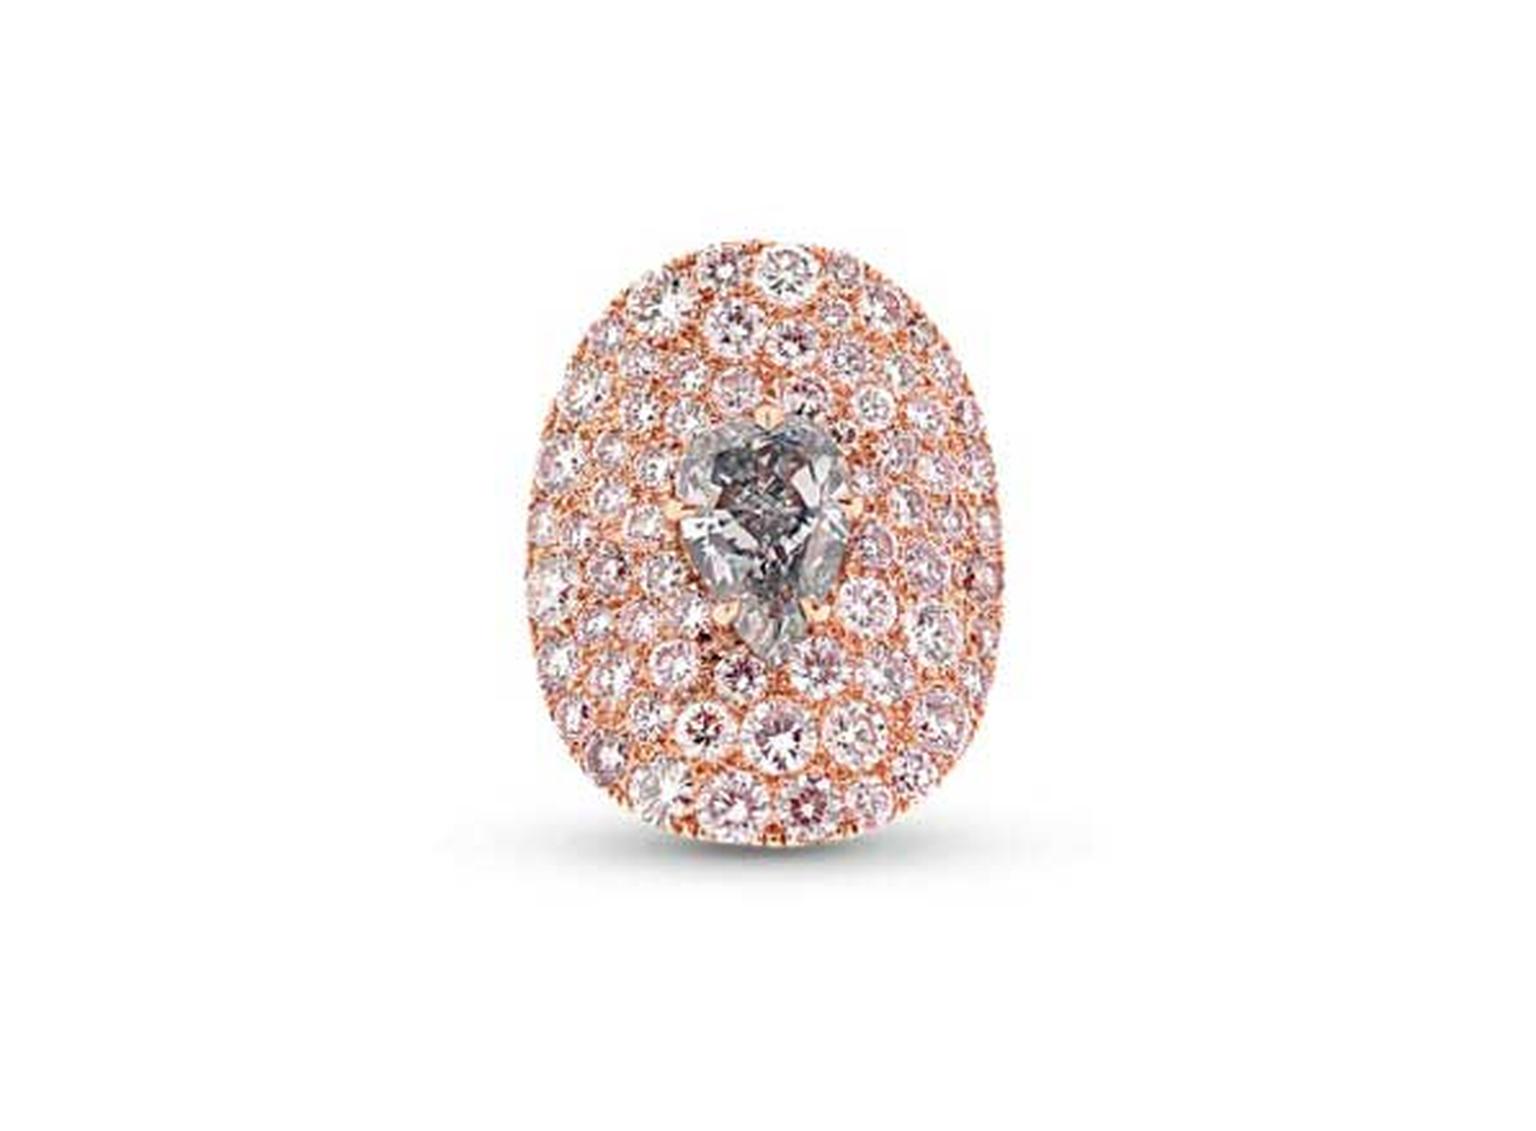 Star Diamond "The Tear of Paris" ring set with a rare grey blue diamond set amongst a sea of Fancy pink diamonds.